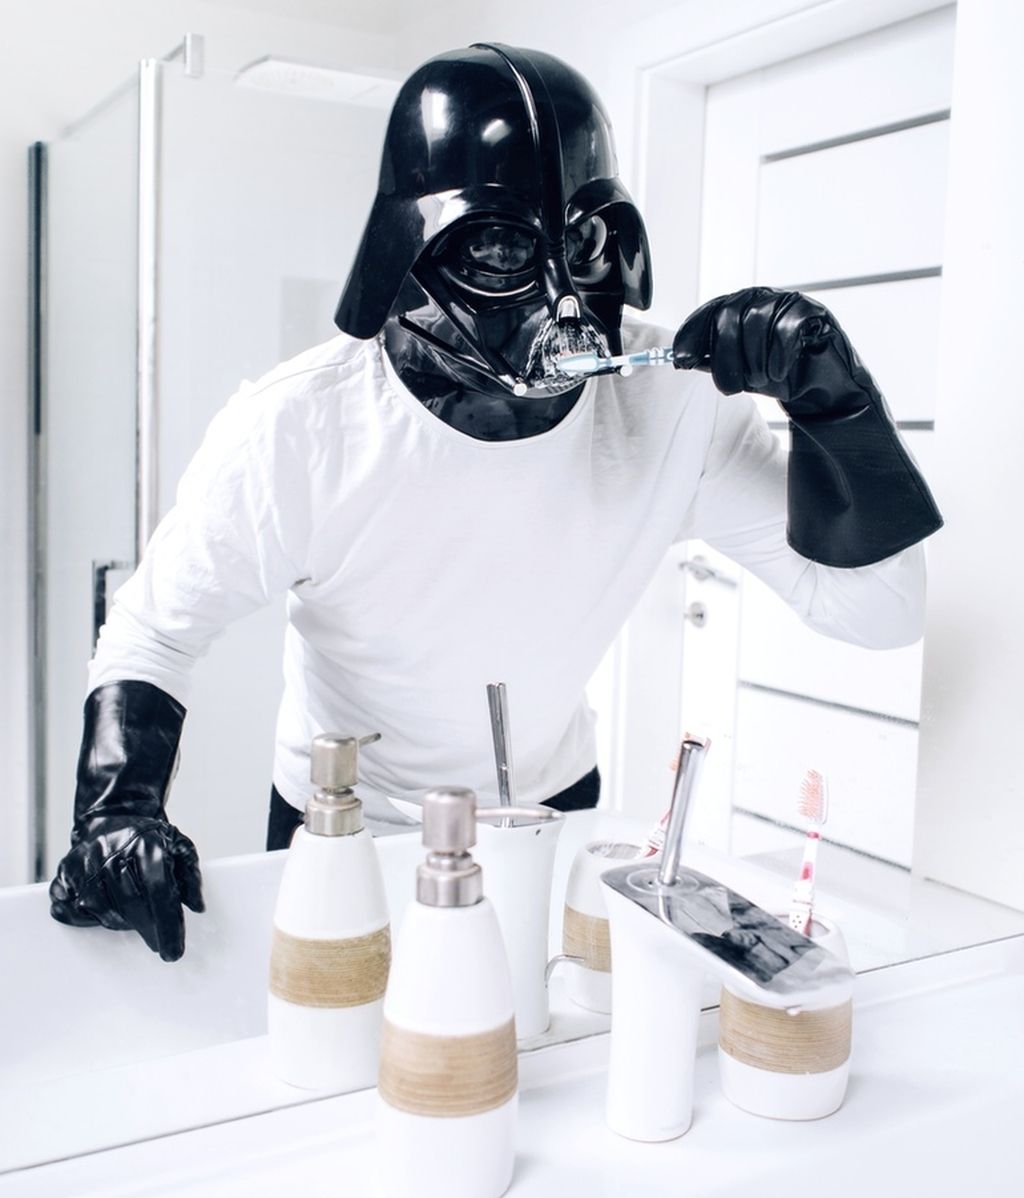 La aburrida vida cotidiana de Darth Vader